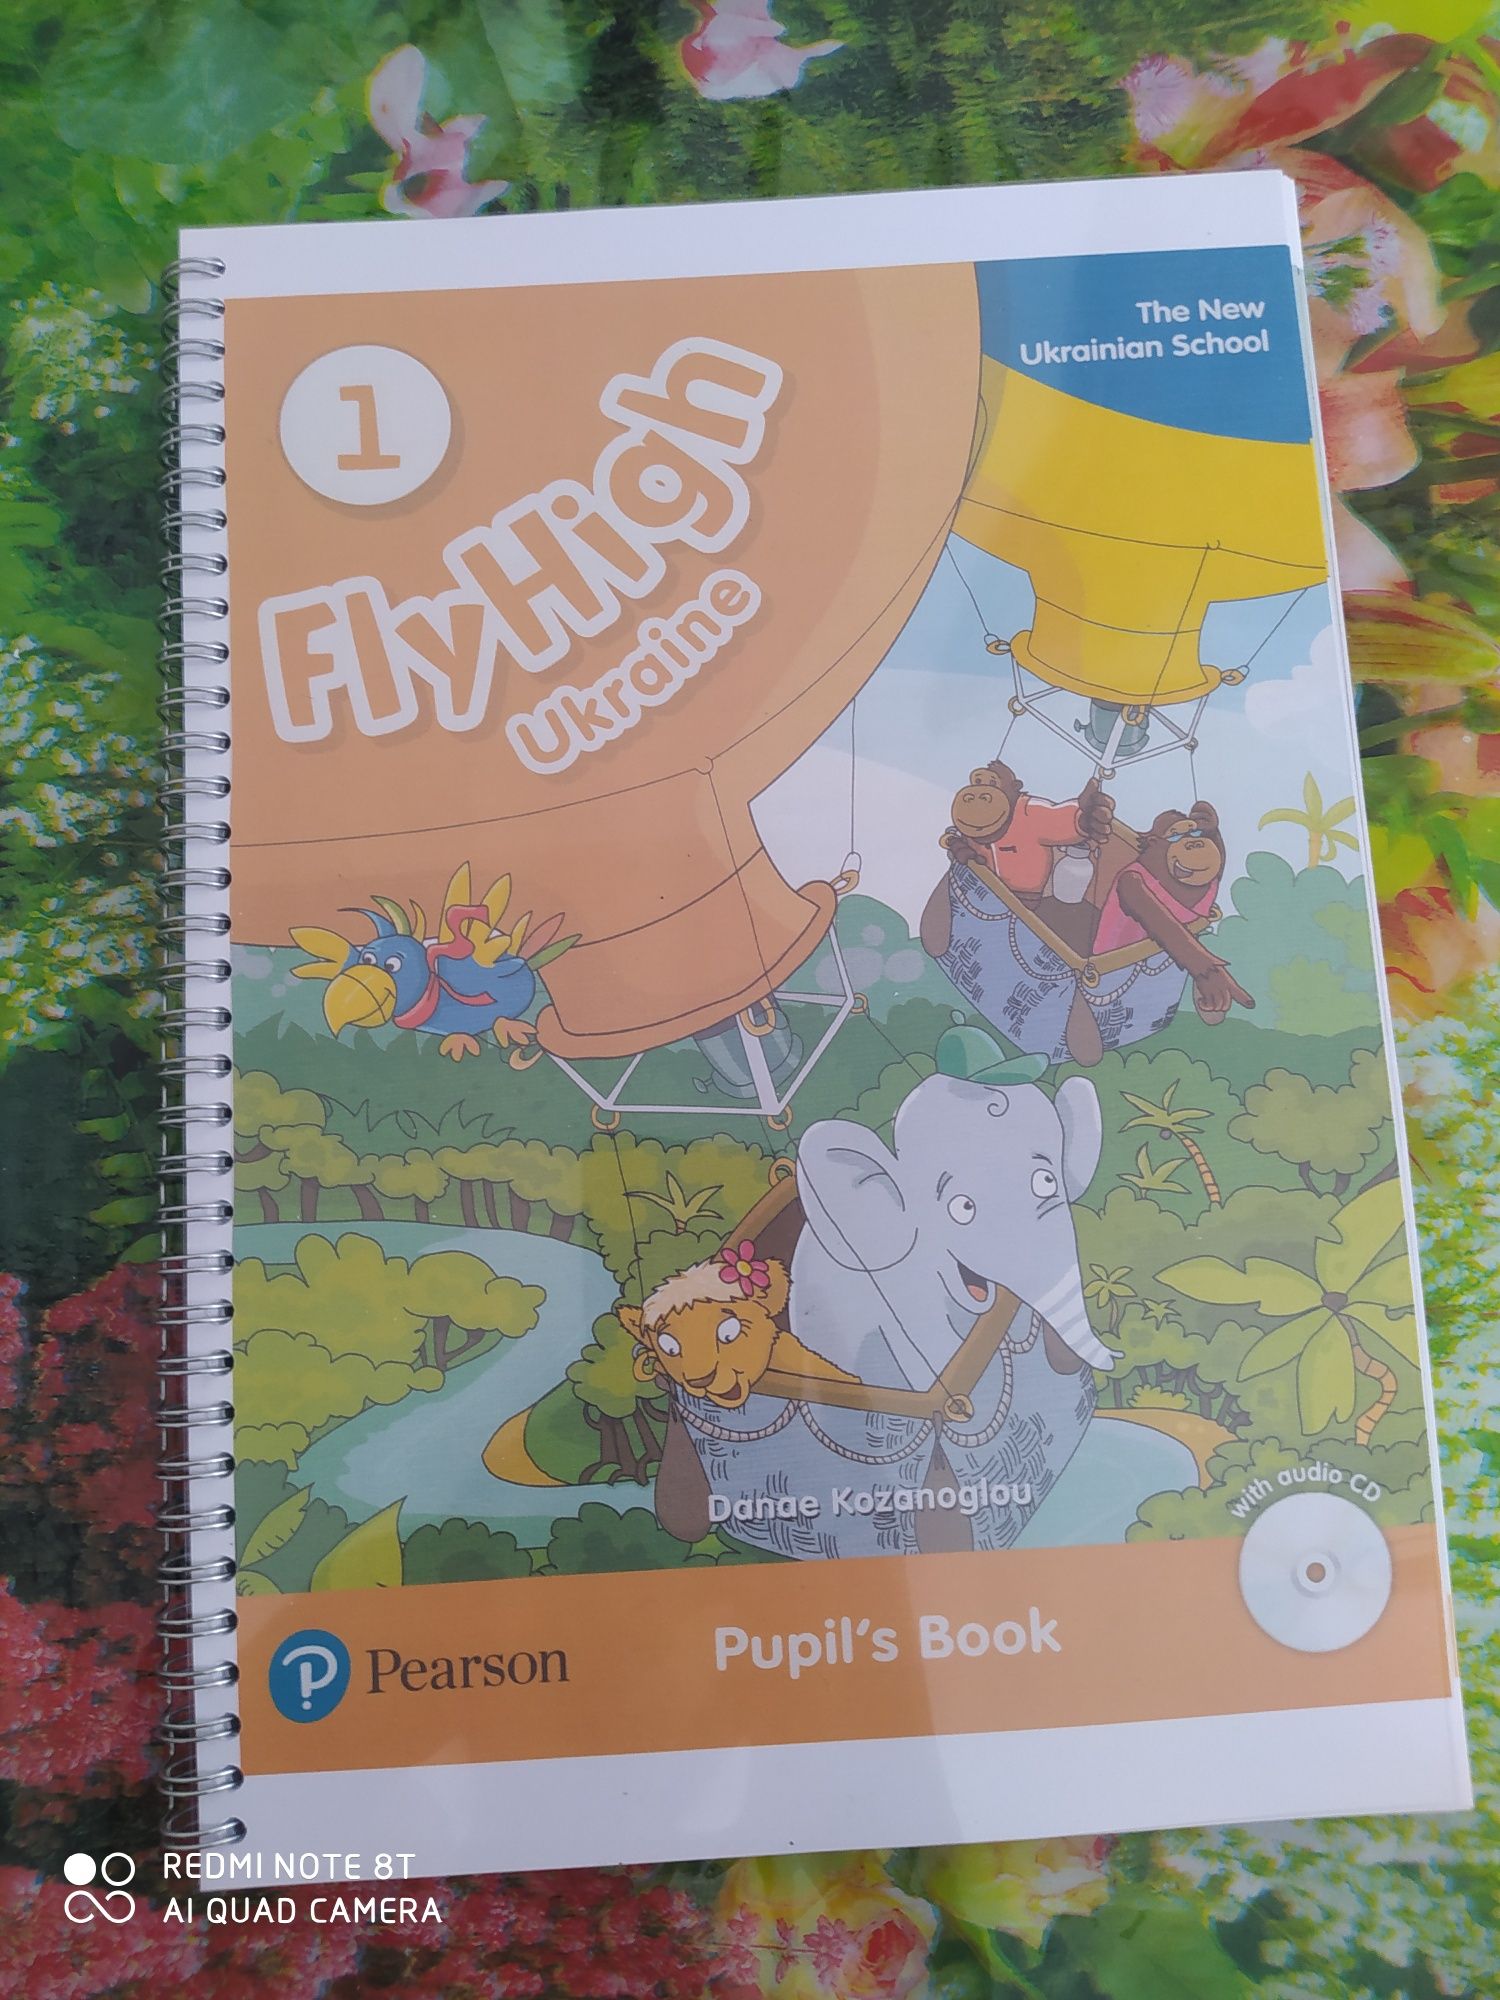 FlyHigh Ukraine 1 Pupils book+Activity book.
Ціна вказана за комплект